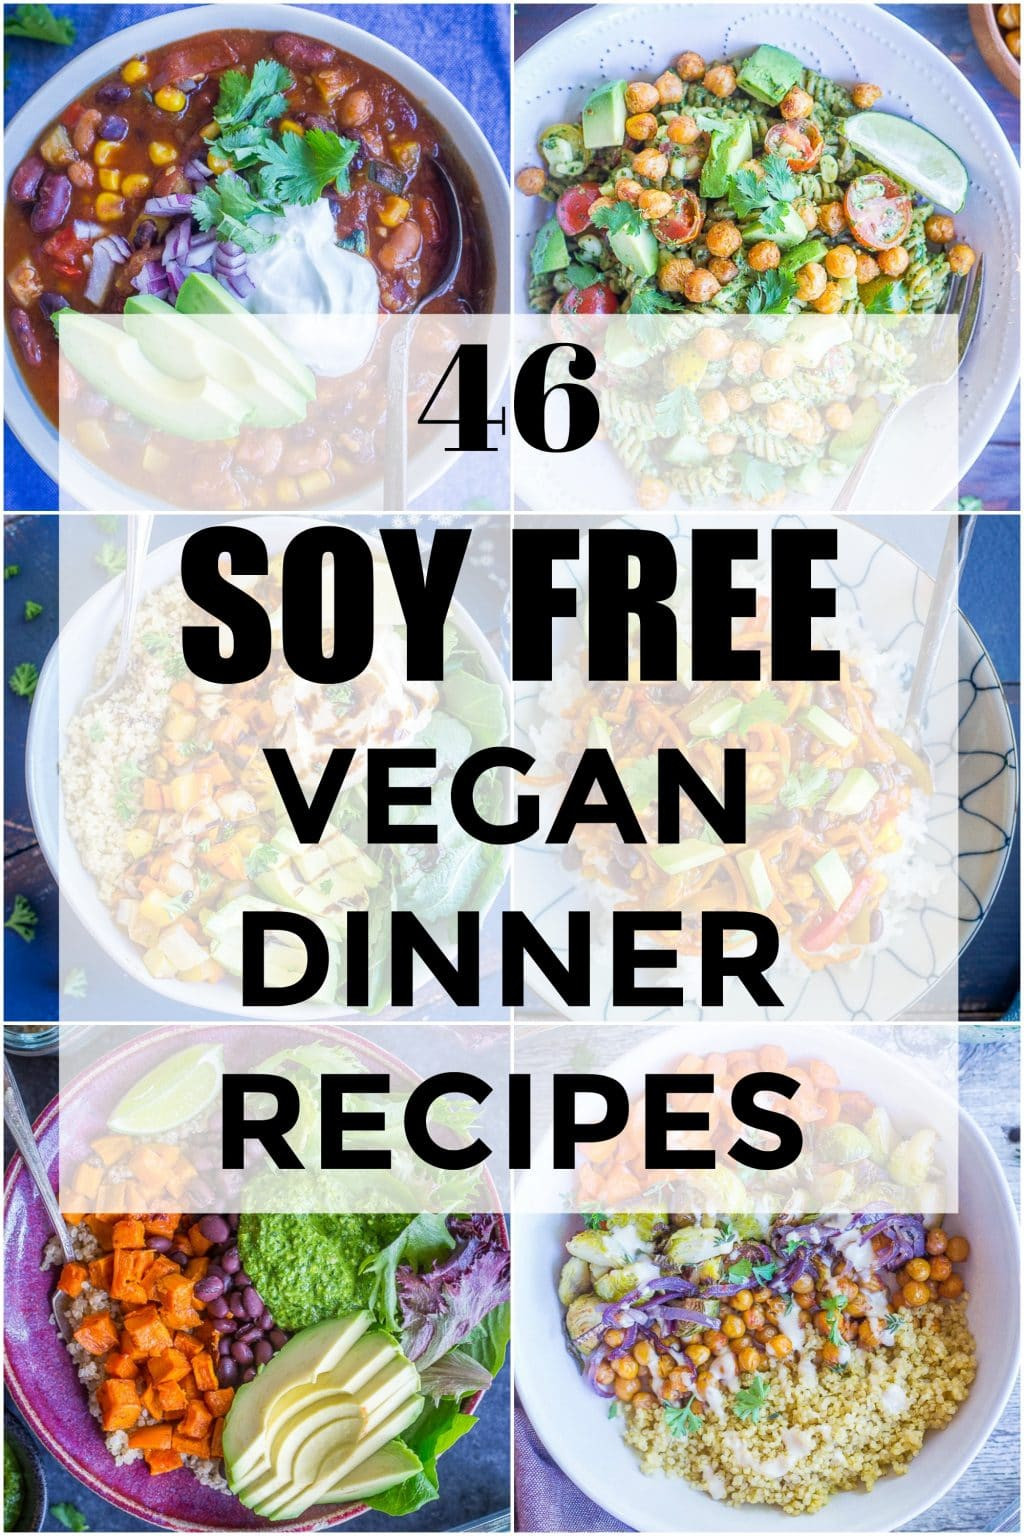 Soy Free Vegan Recipes
 46 Soy Free Vegan Dinner Recipes She Likes Food